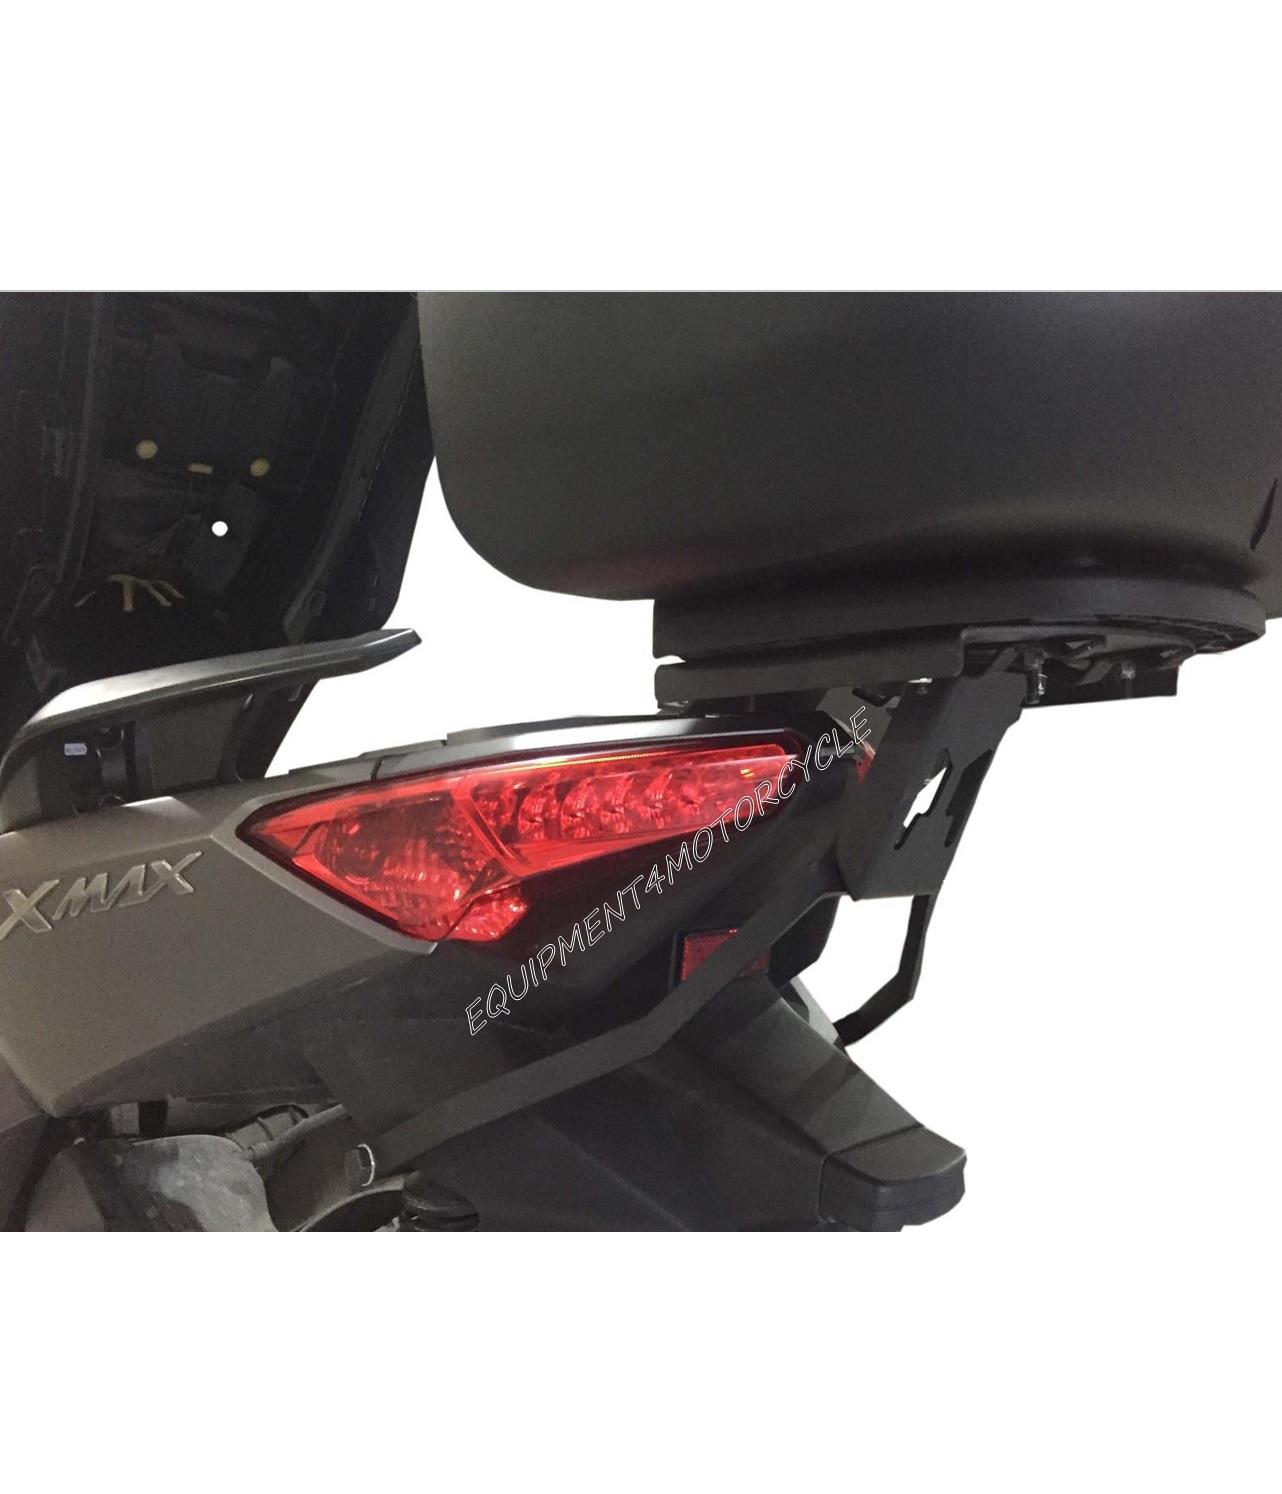 Yamaha XMAX400 2018-2020 rear rack luggage carrier